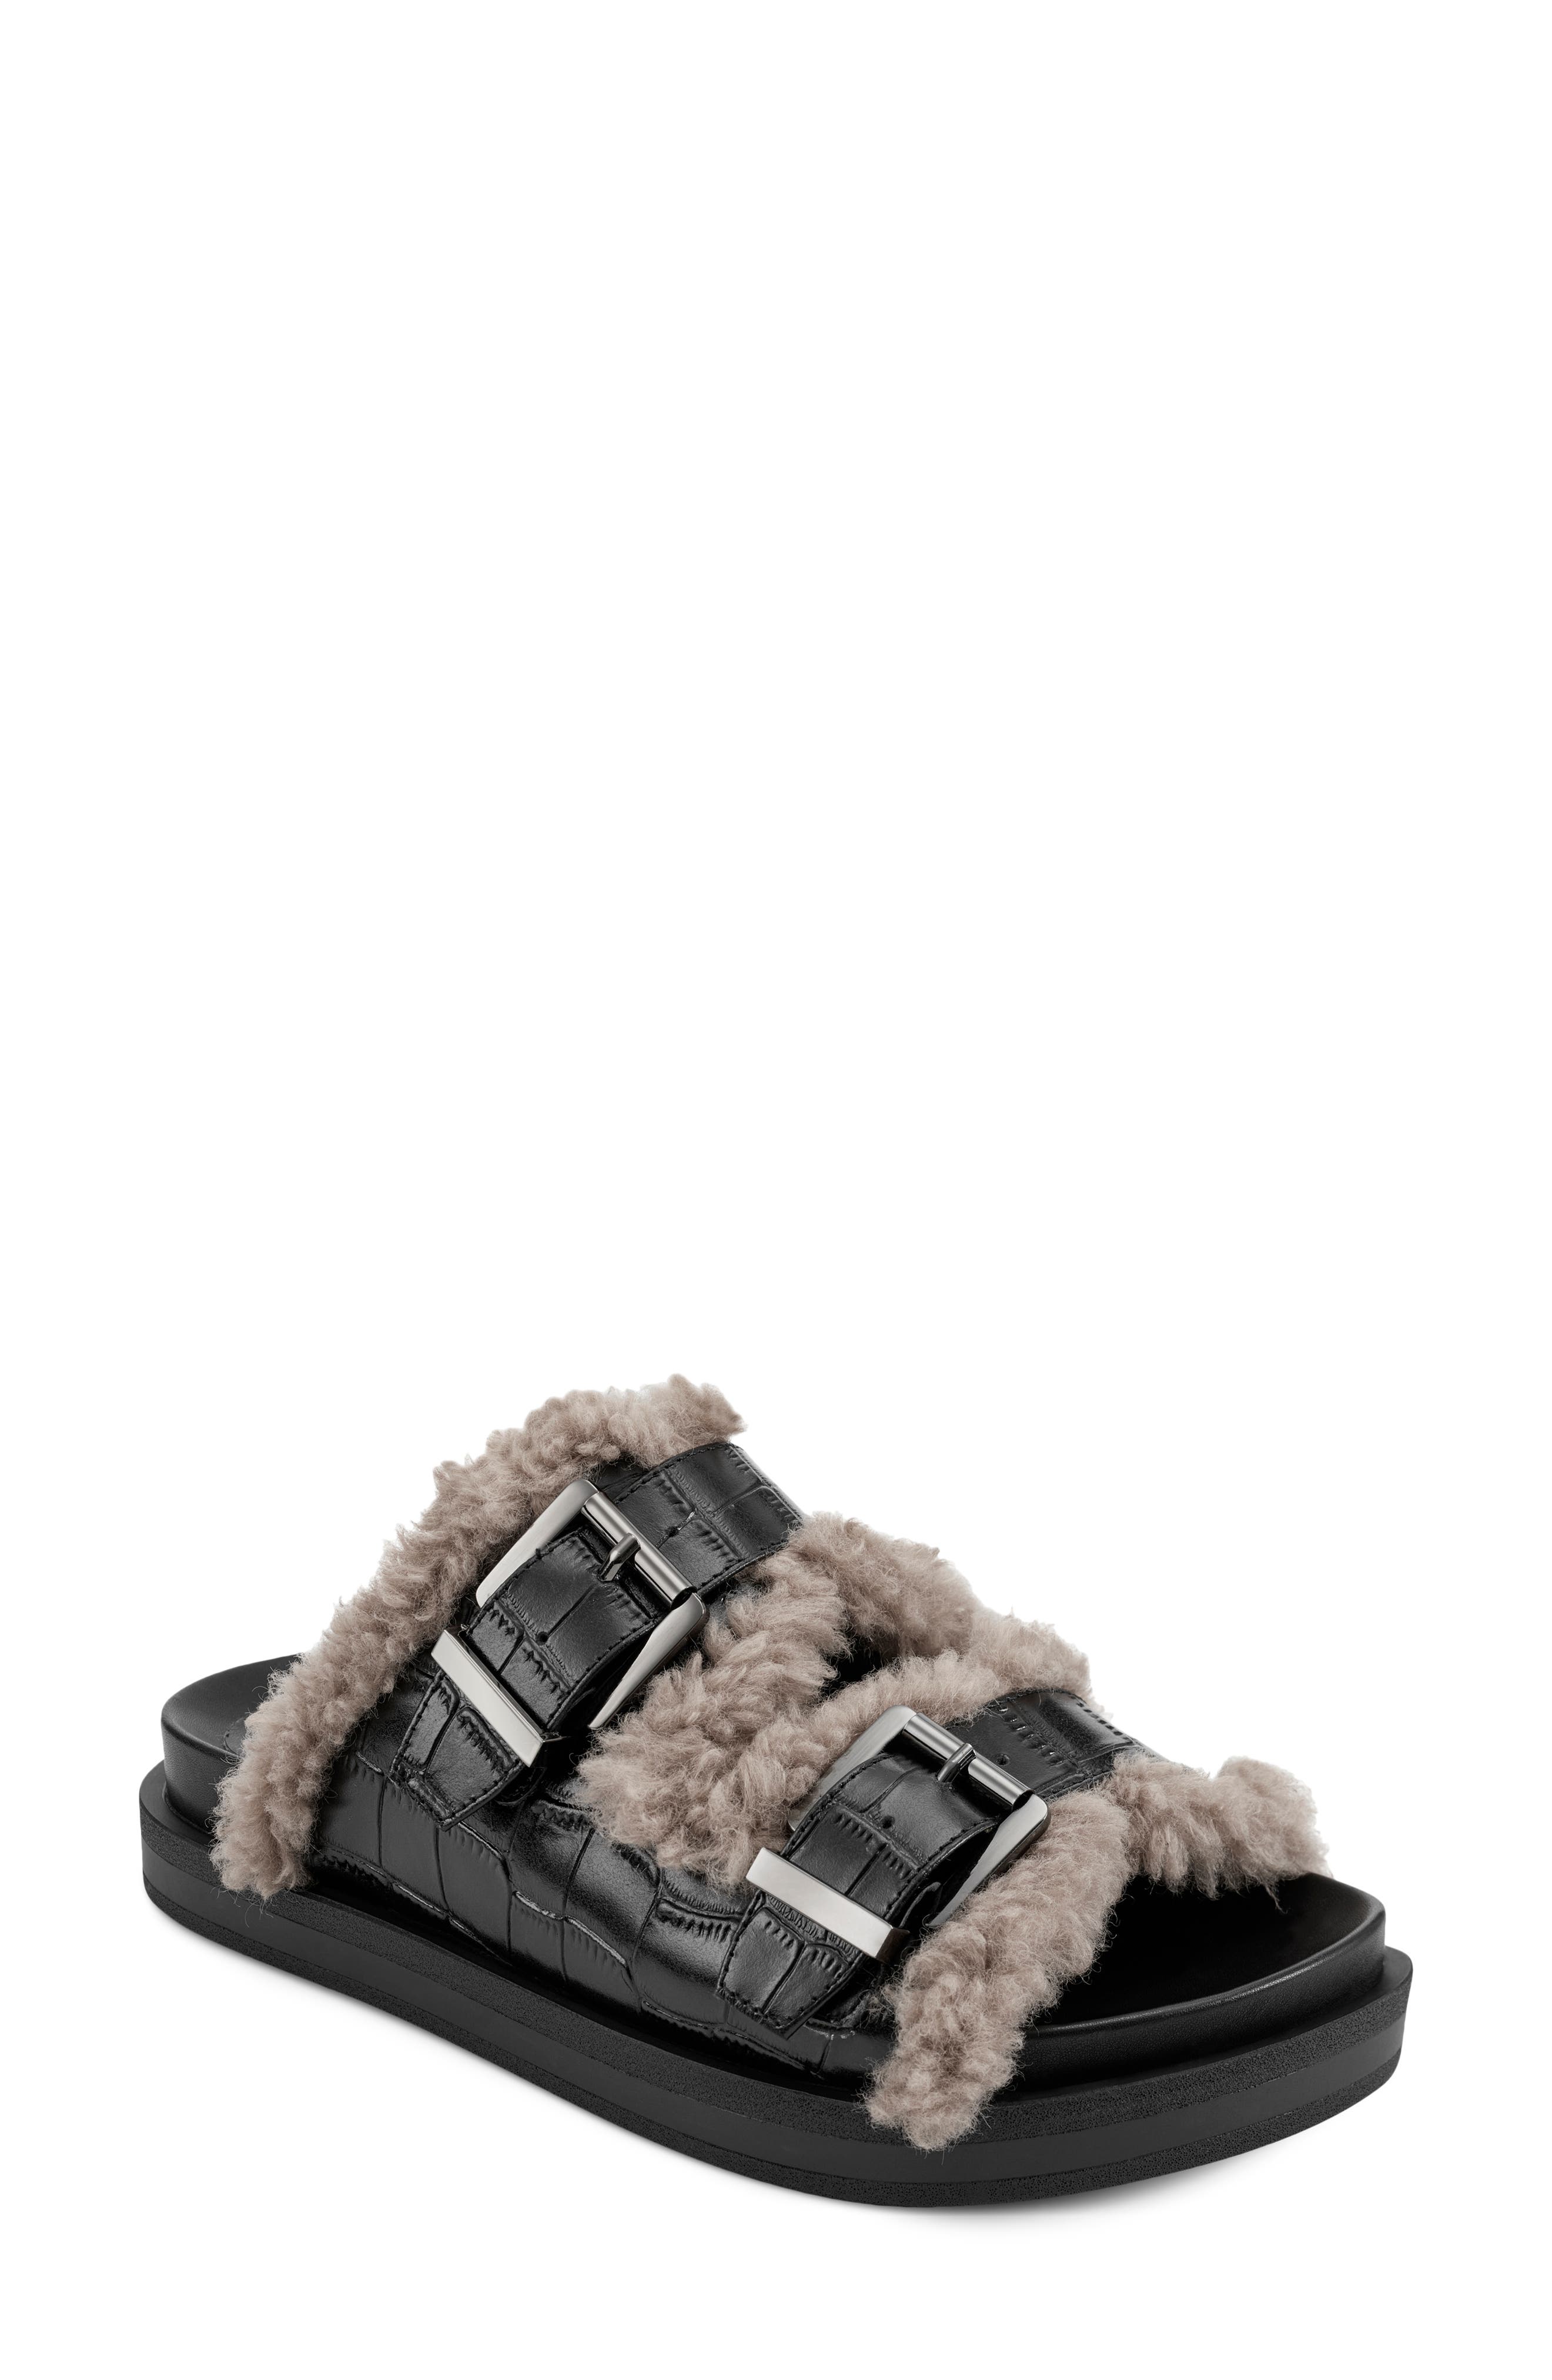 Aerosoles Olivia Faux Fur Double Strap Sandal In Black Croc